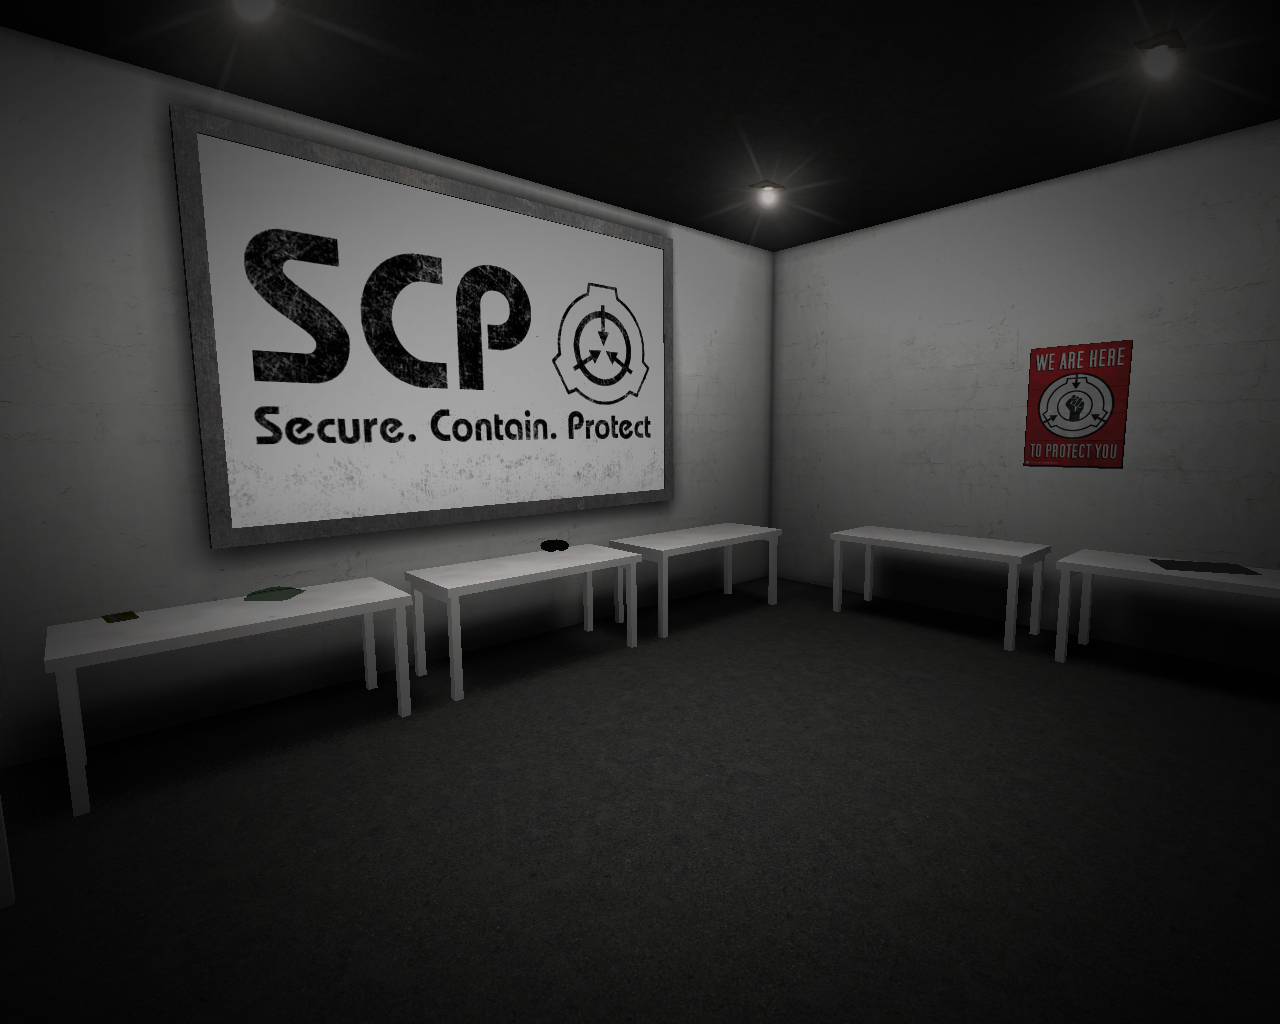 scp containment breach ultimate edition